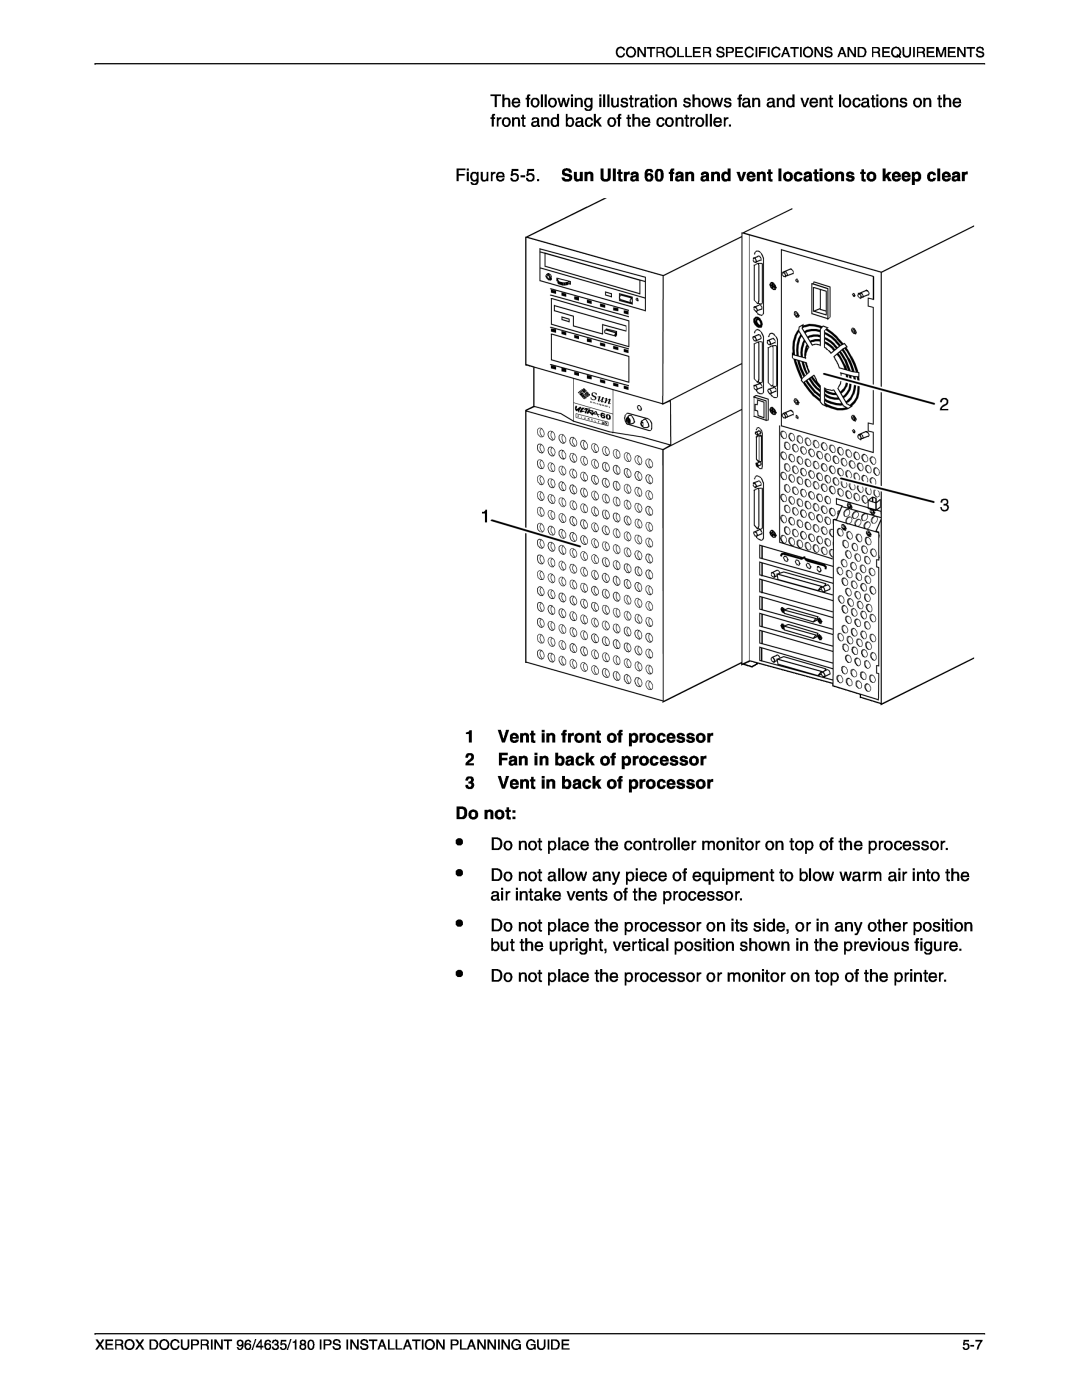 Xerox 180 IPS manual 1Vent in front of processor, 2Fan in back of processor, 3Vent in back of processor Do not 